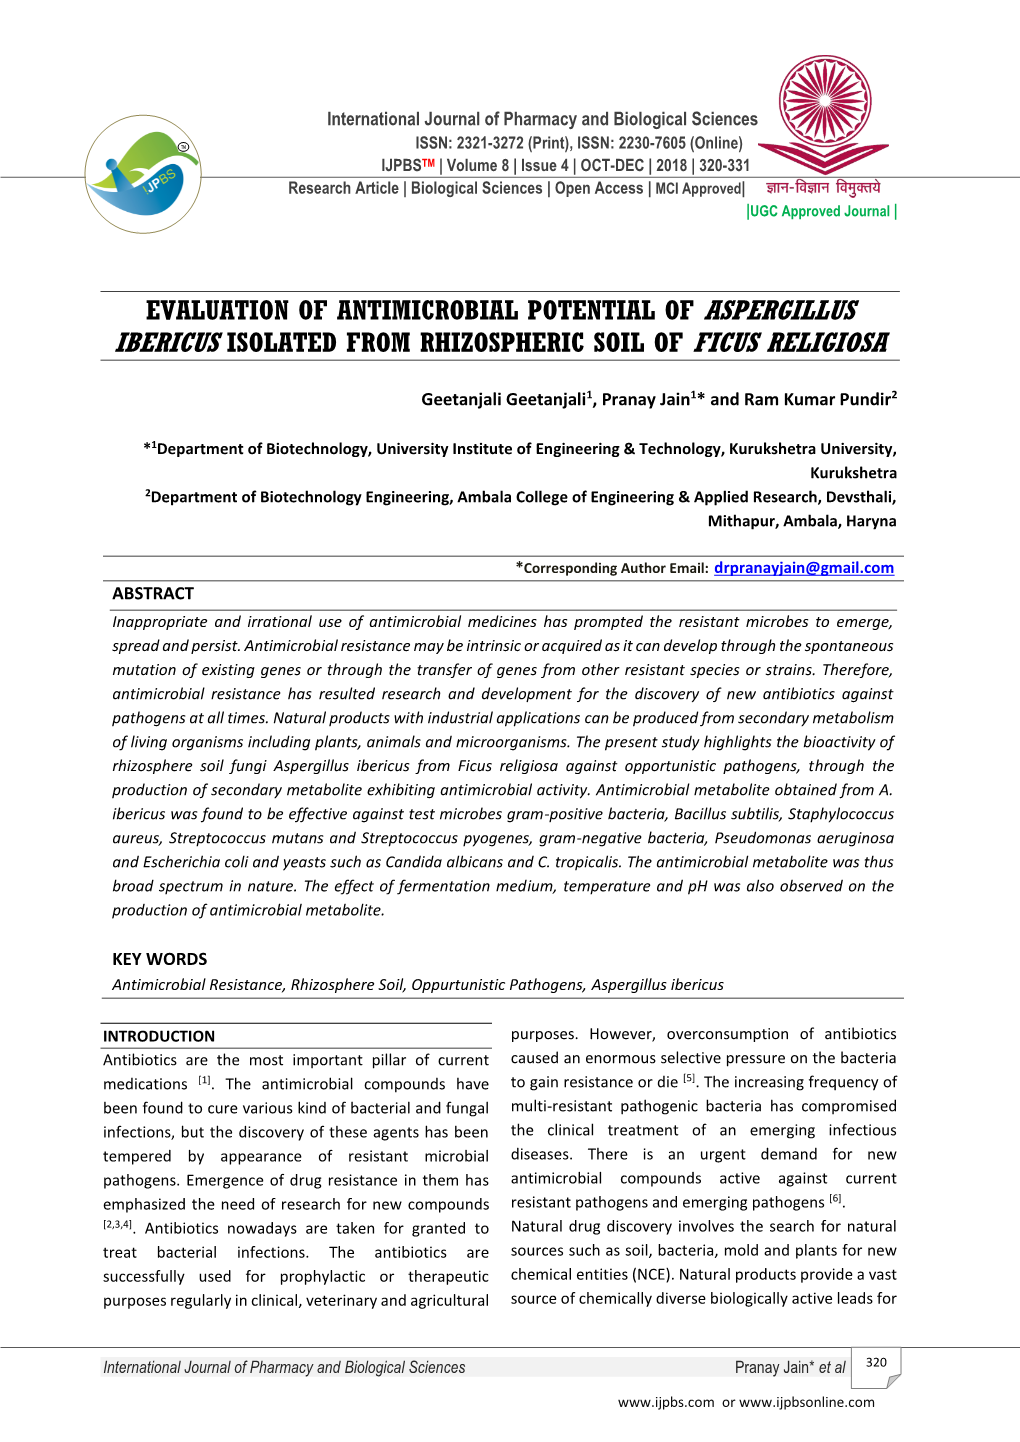 Evaluation of Antimicrobial Potential of Aspergillus Ibericus Isolated from Rhizospheric Soil of Ficus Religiosa